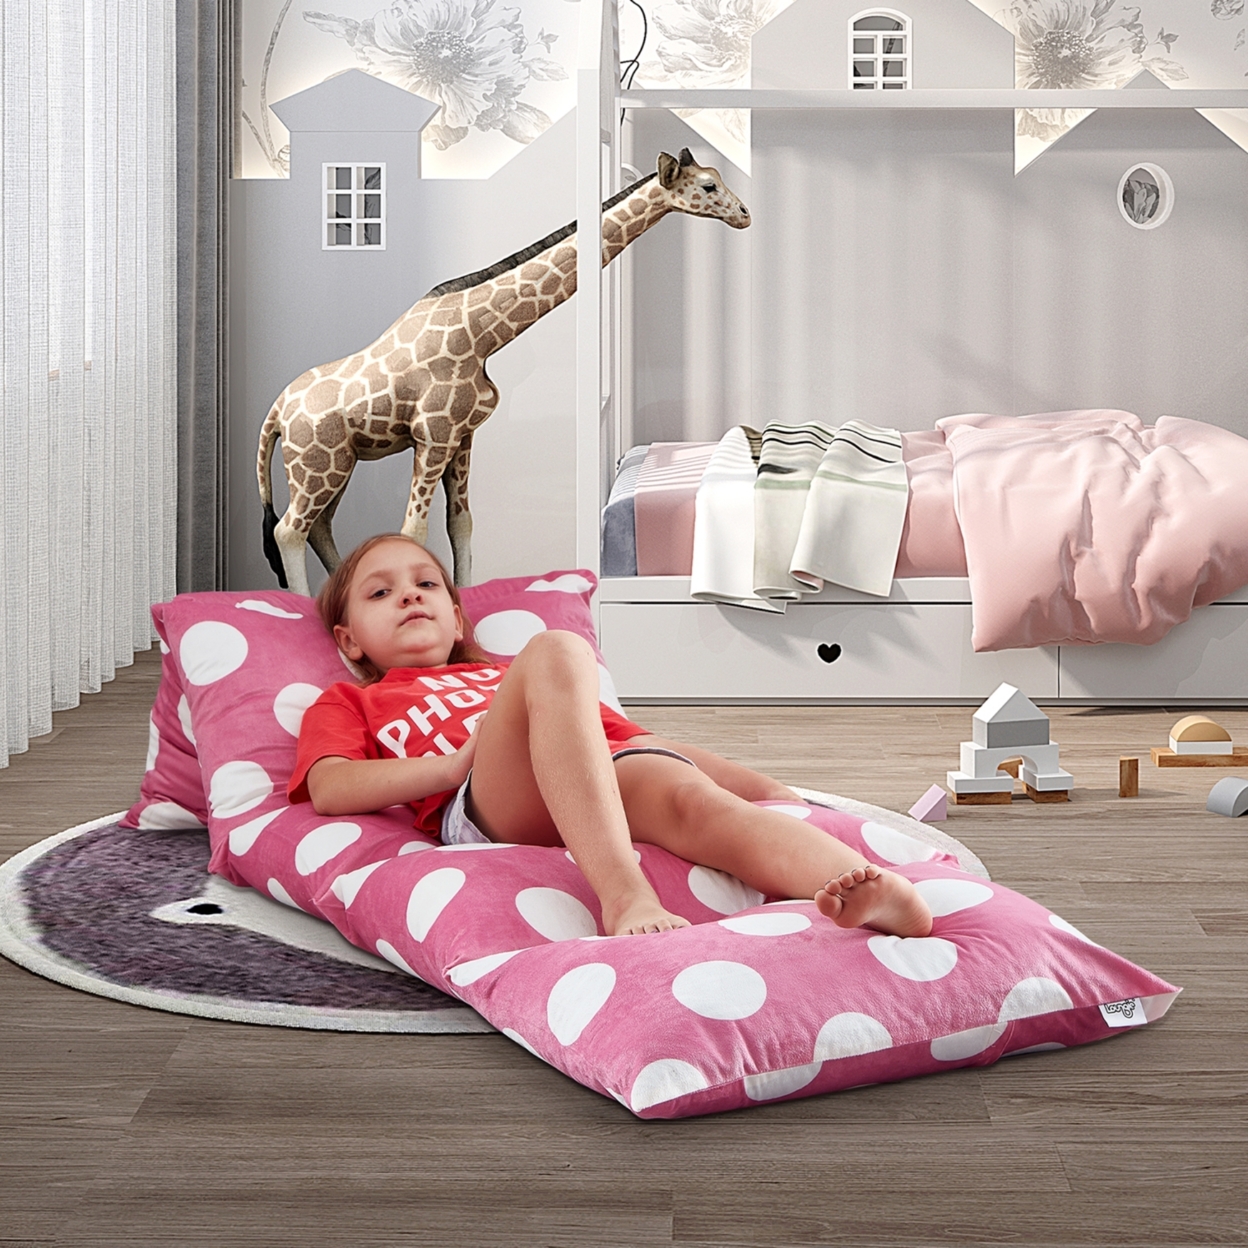 Floor Pillow Cover-Microfiber-Nap Mat-Requires 5 Standard Twin Size Pillows-Stars-Dot - Pink Polka Dots